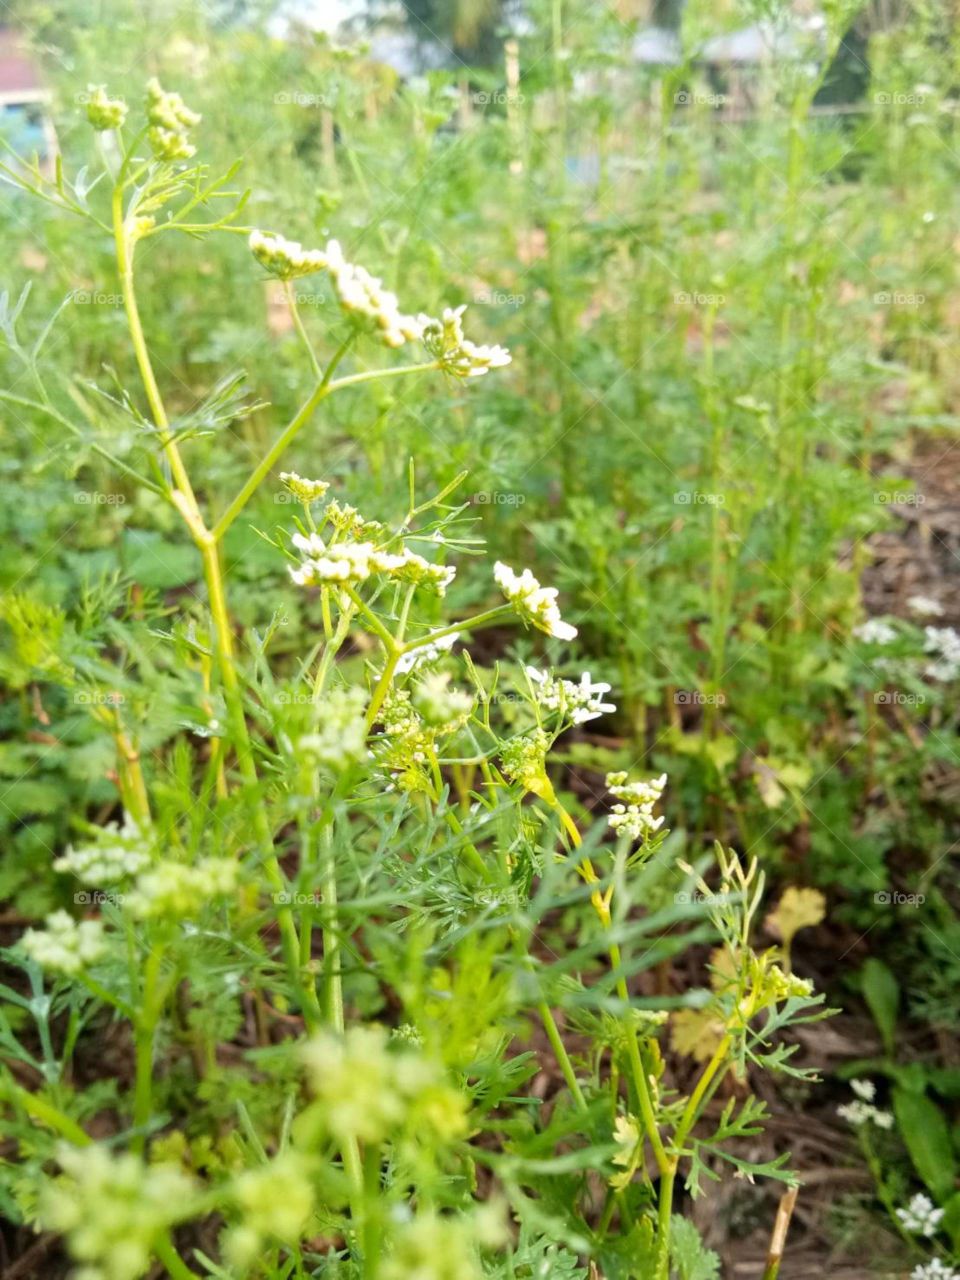 herb
flower herb